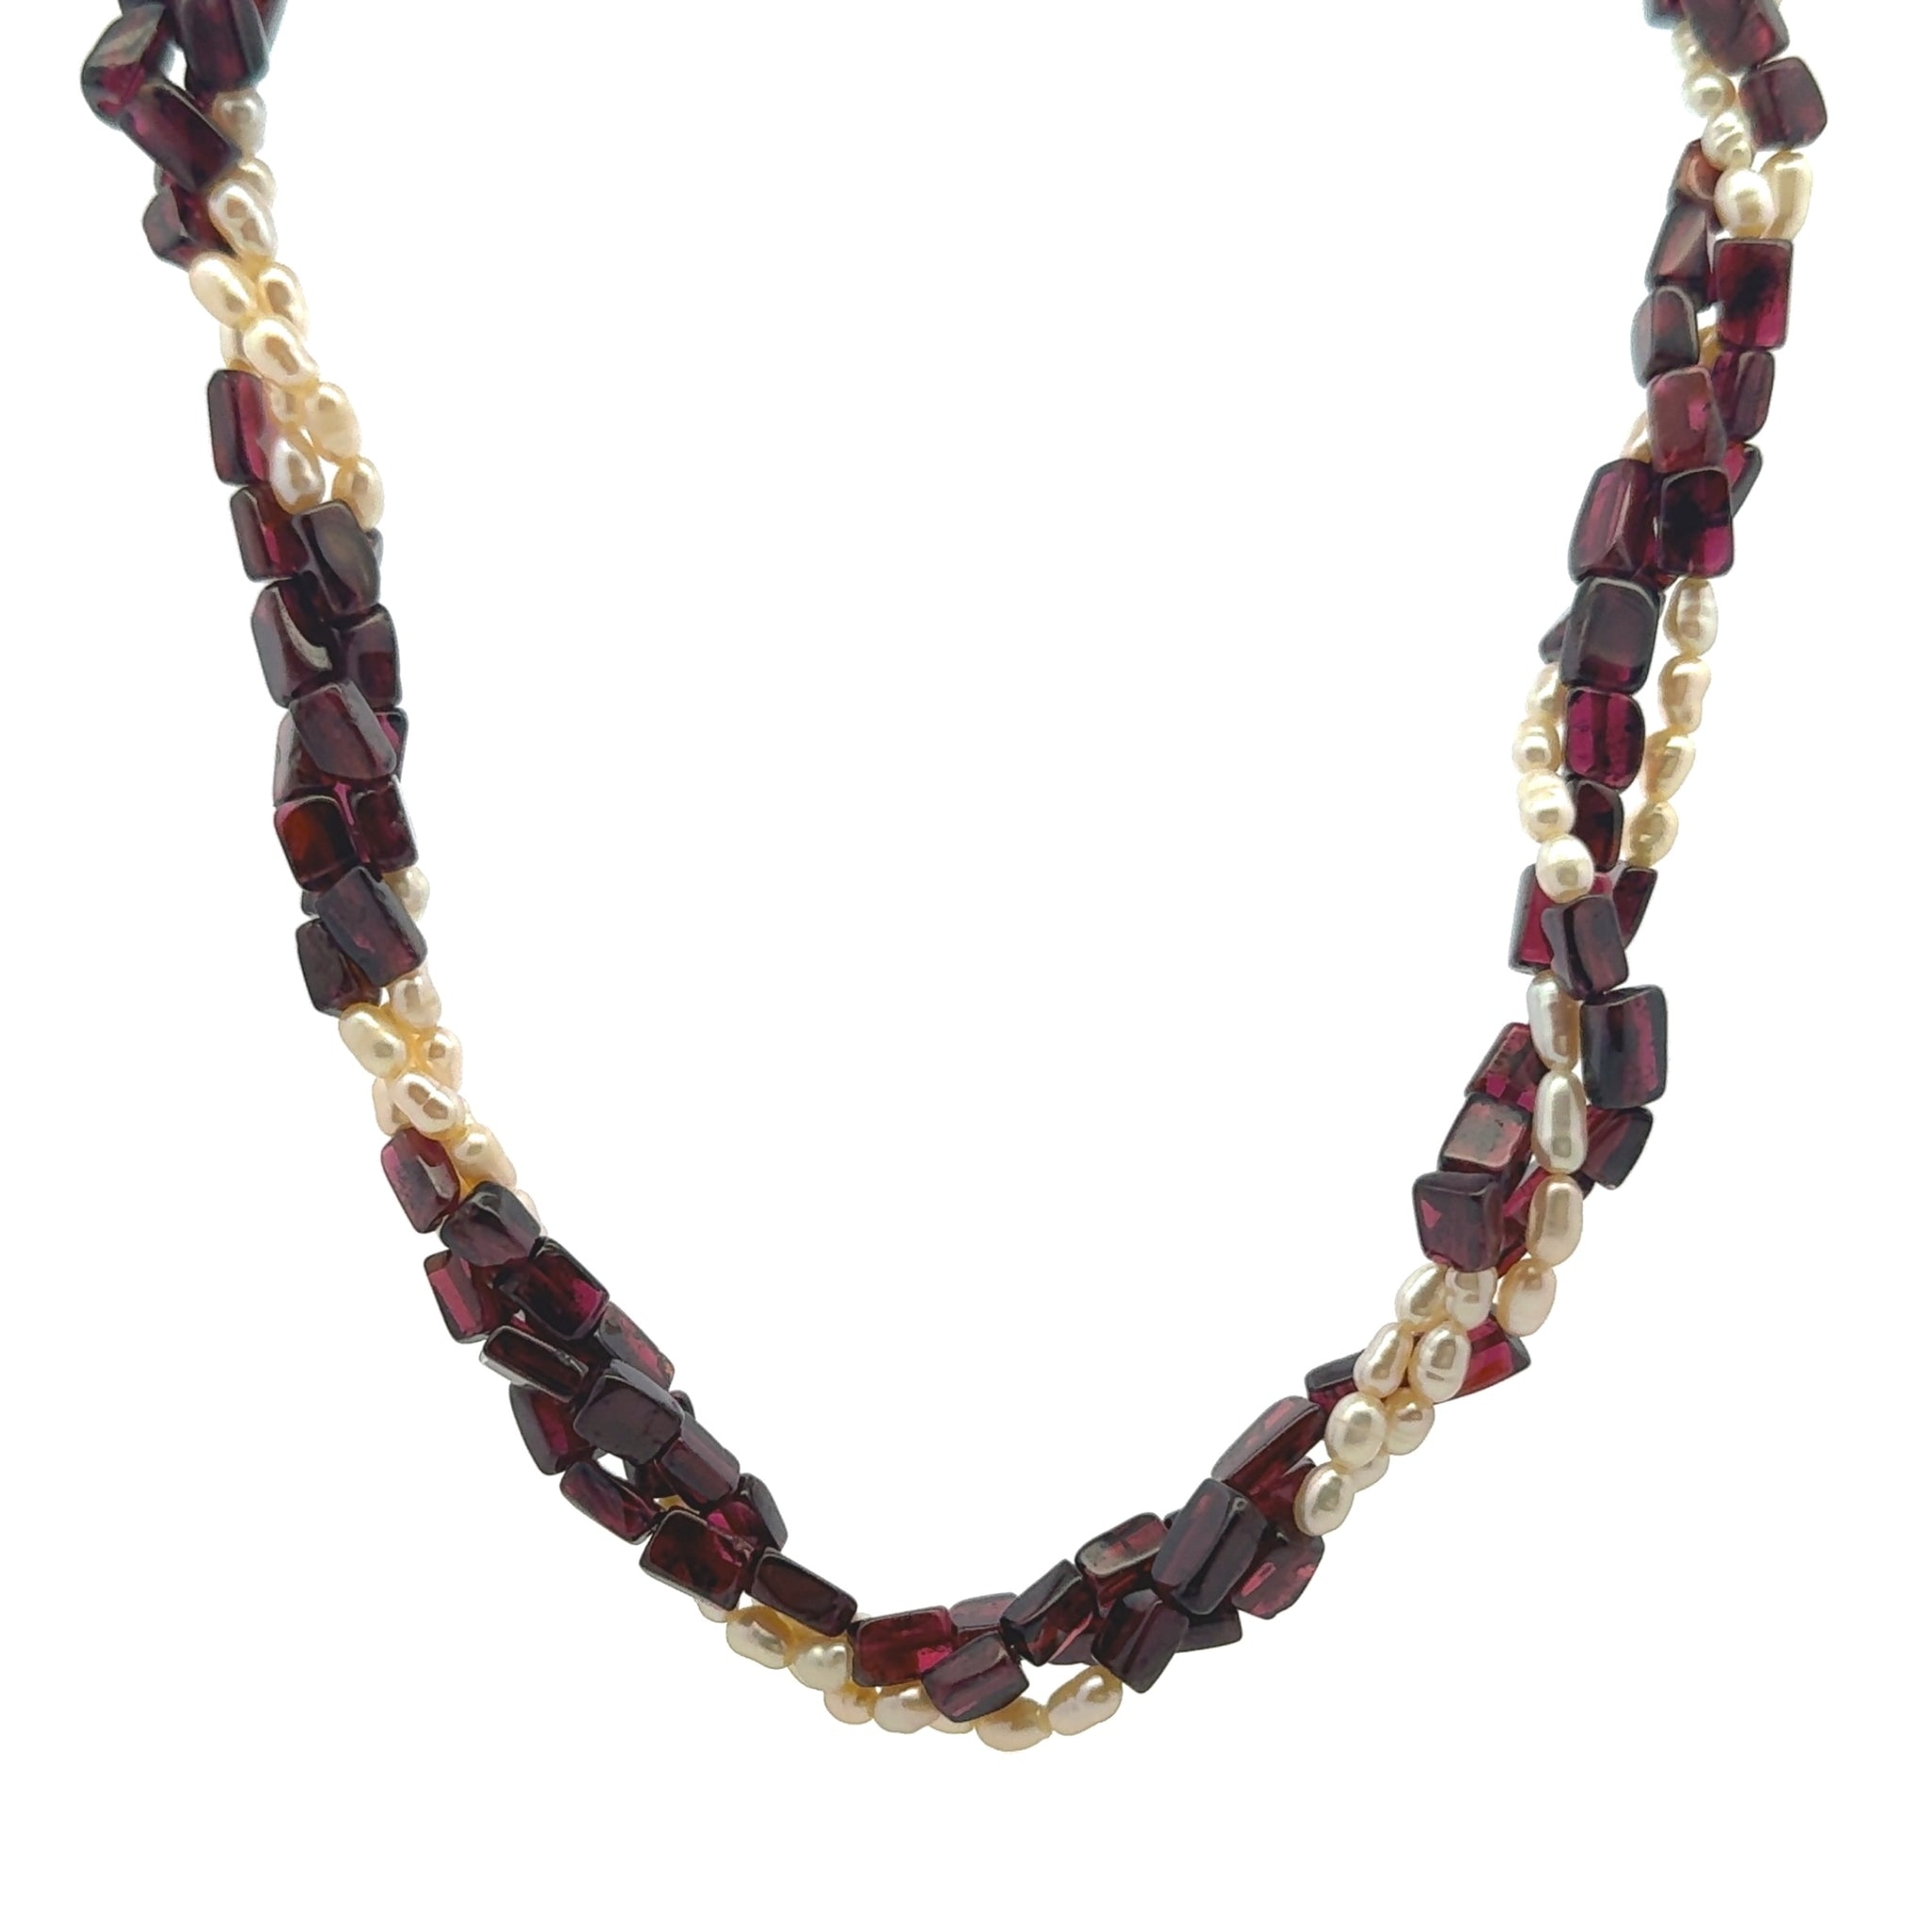 Natural Handmade Necklace 16"-18" Garnet Pearls Birthstone Gem Beads Jewelry